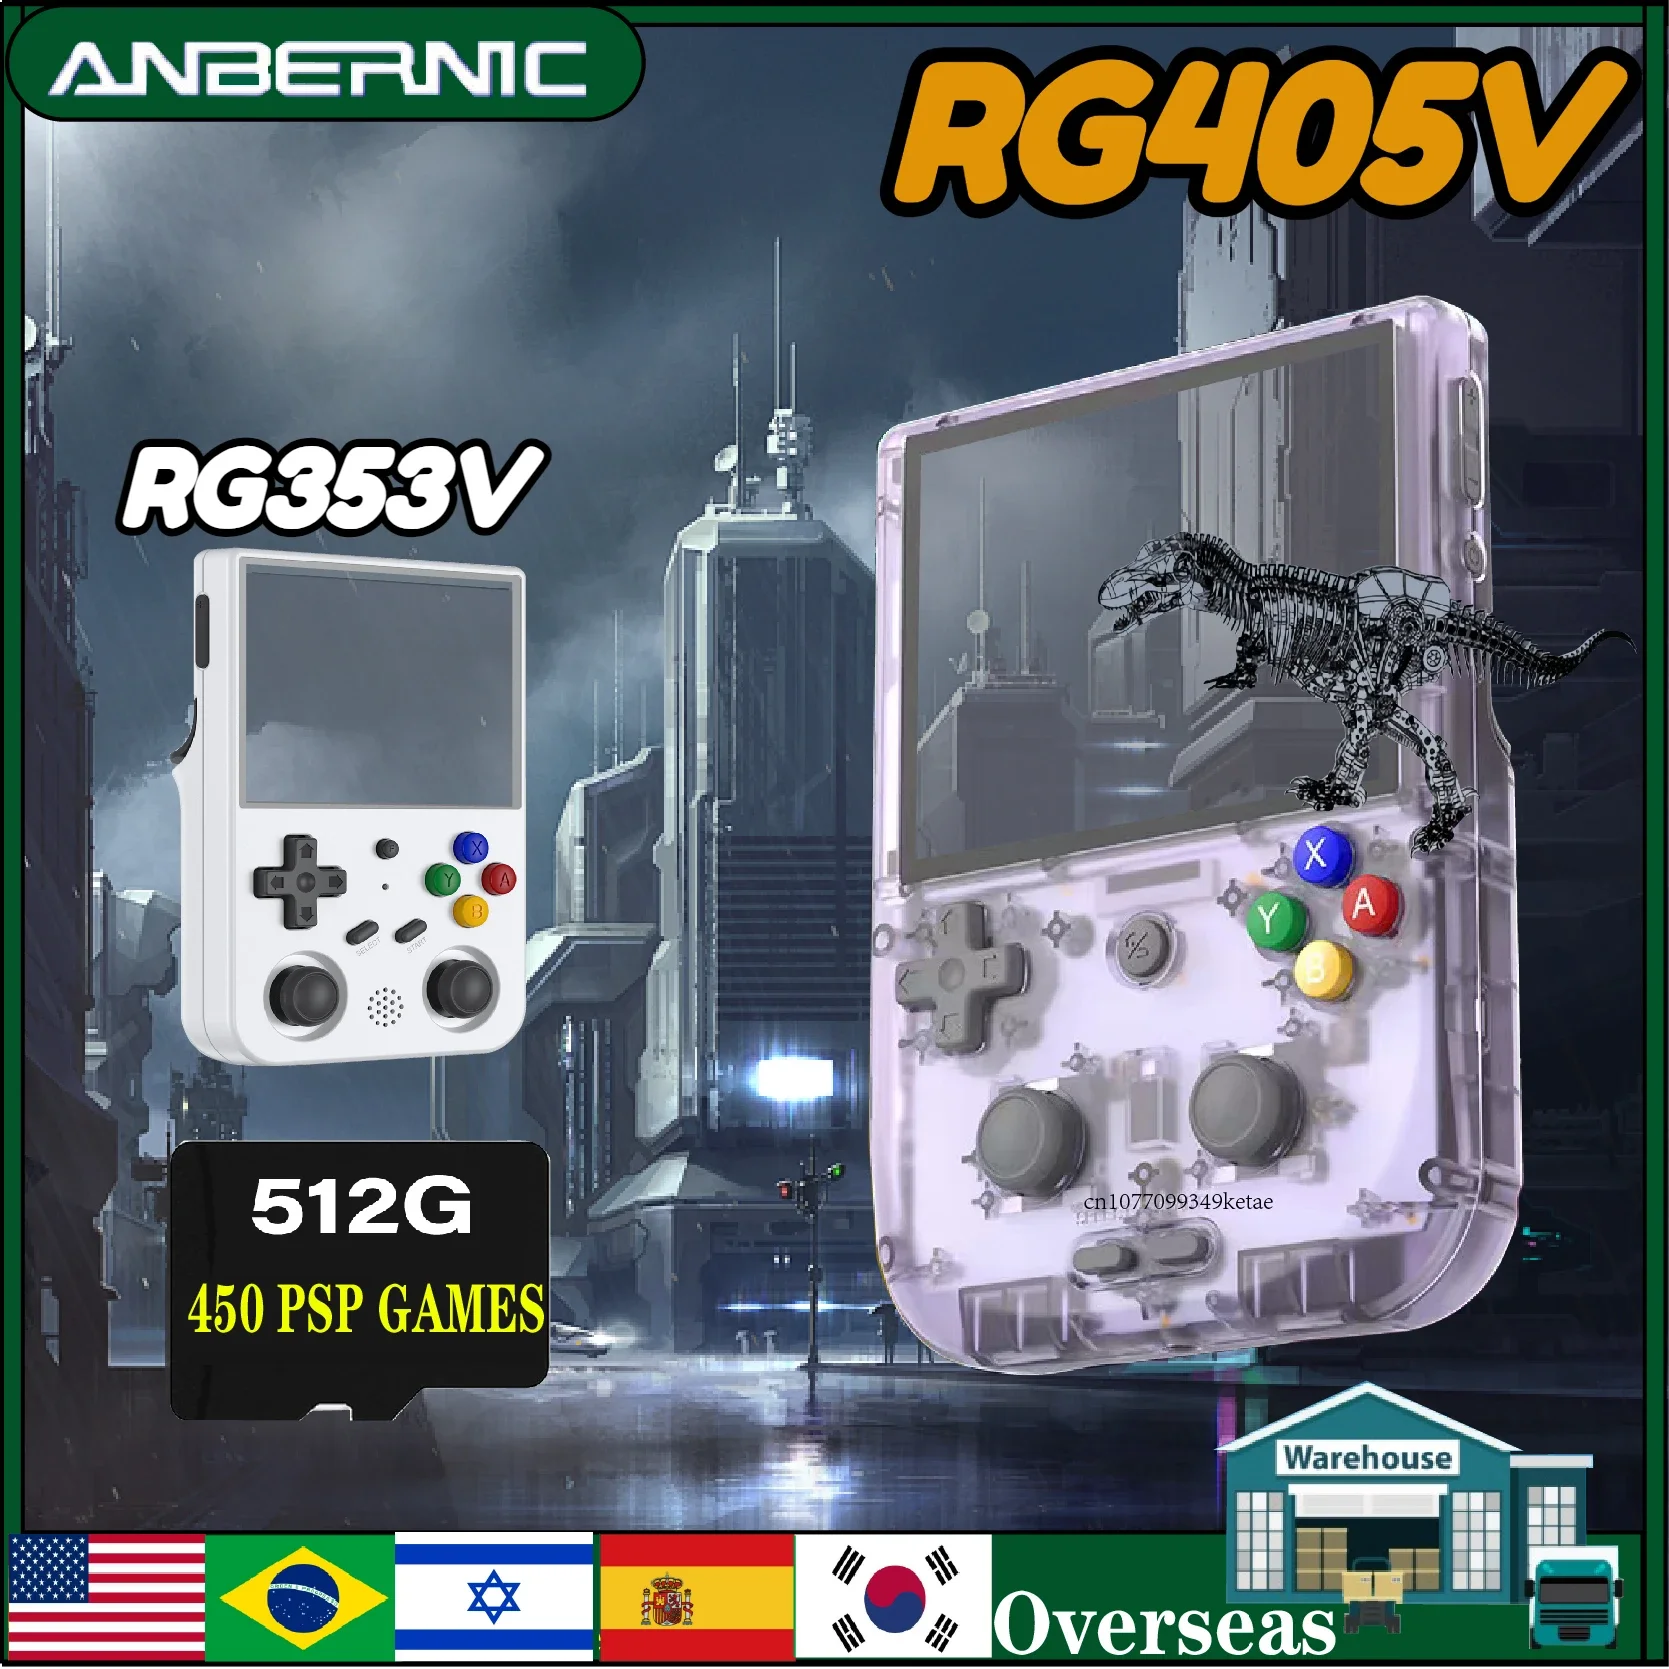 ANBERNIC RG405V, 4.0 IPS Touch 640x480